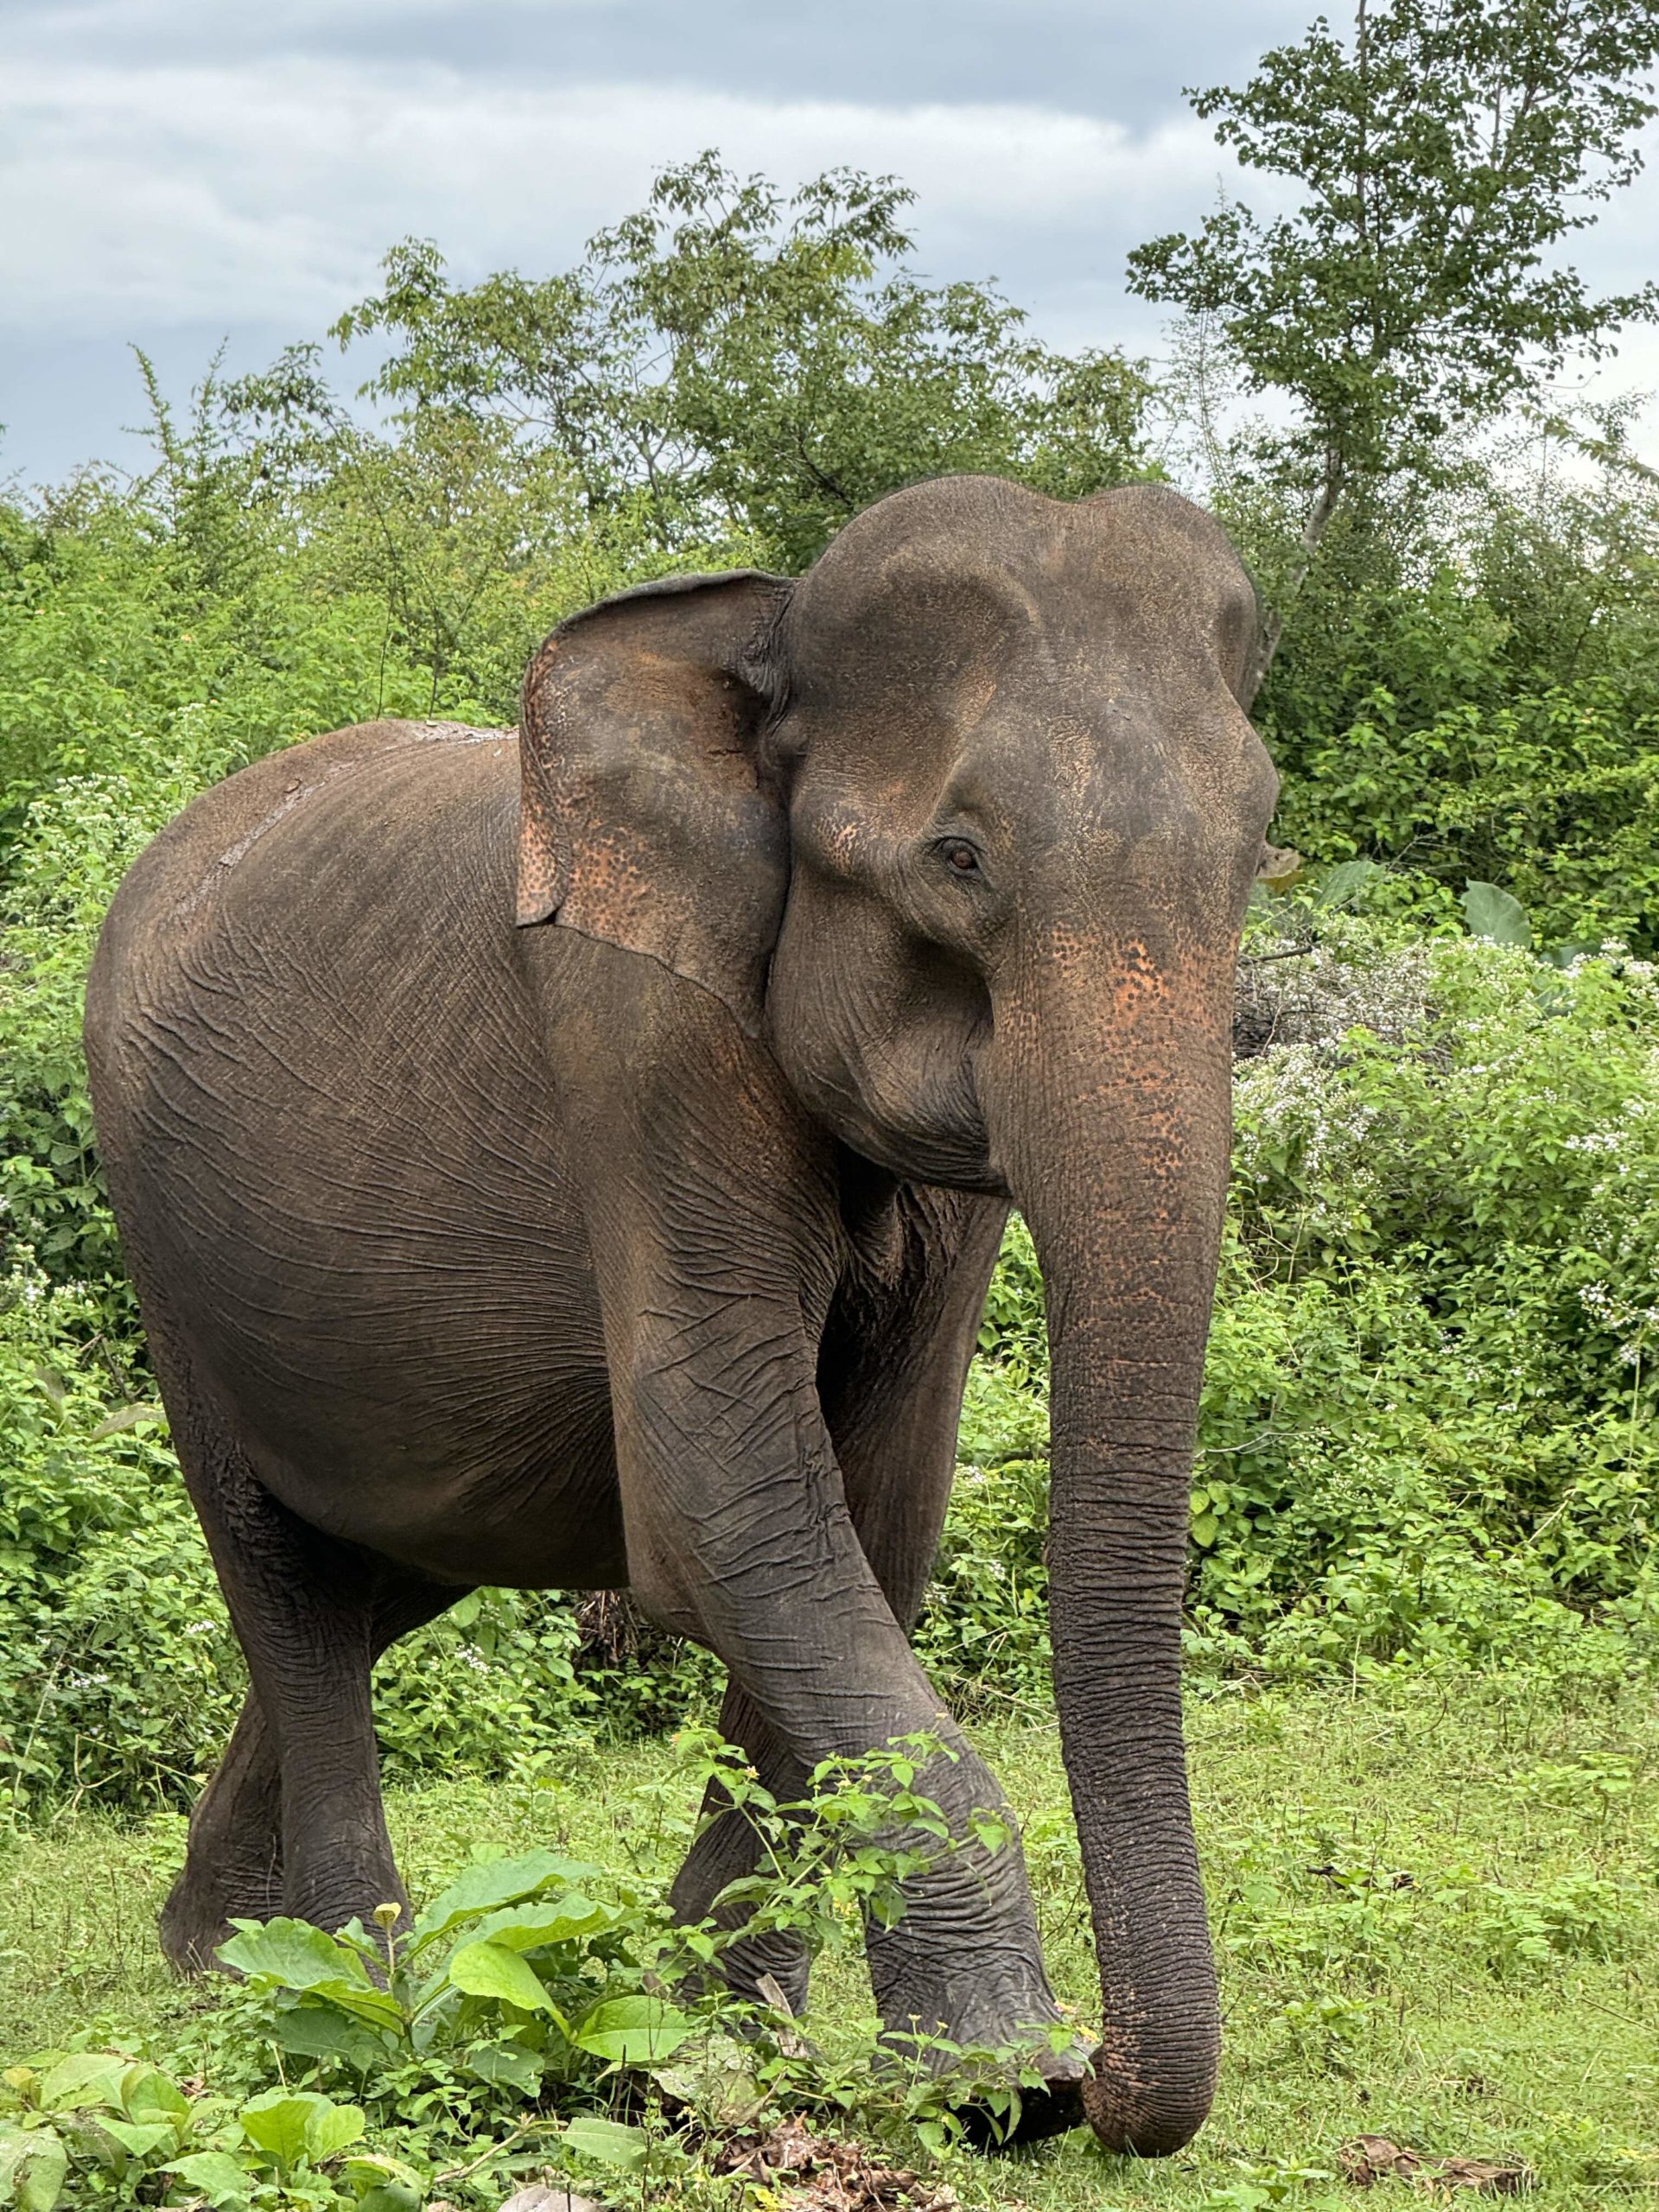 An Asian elephant in Sri Lanka